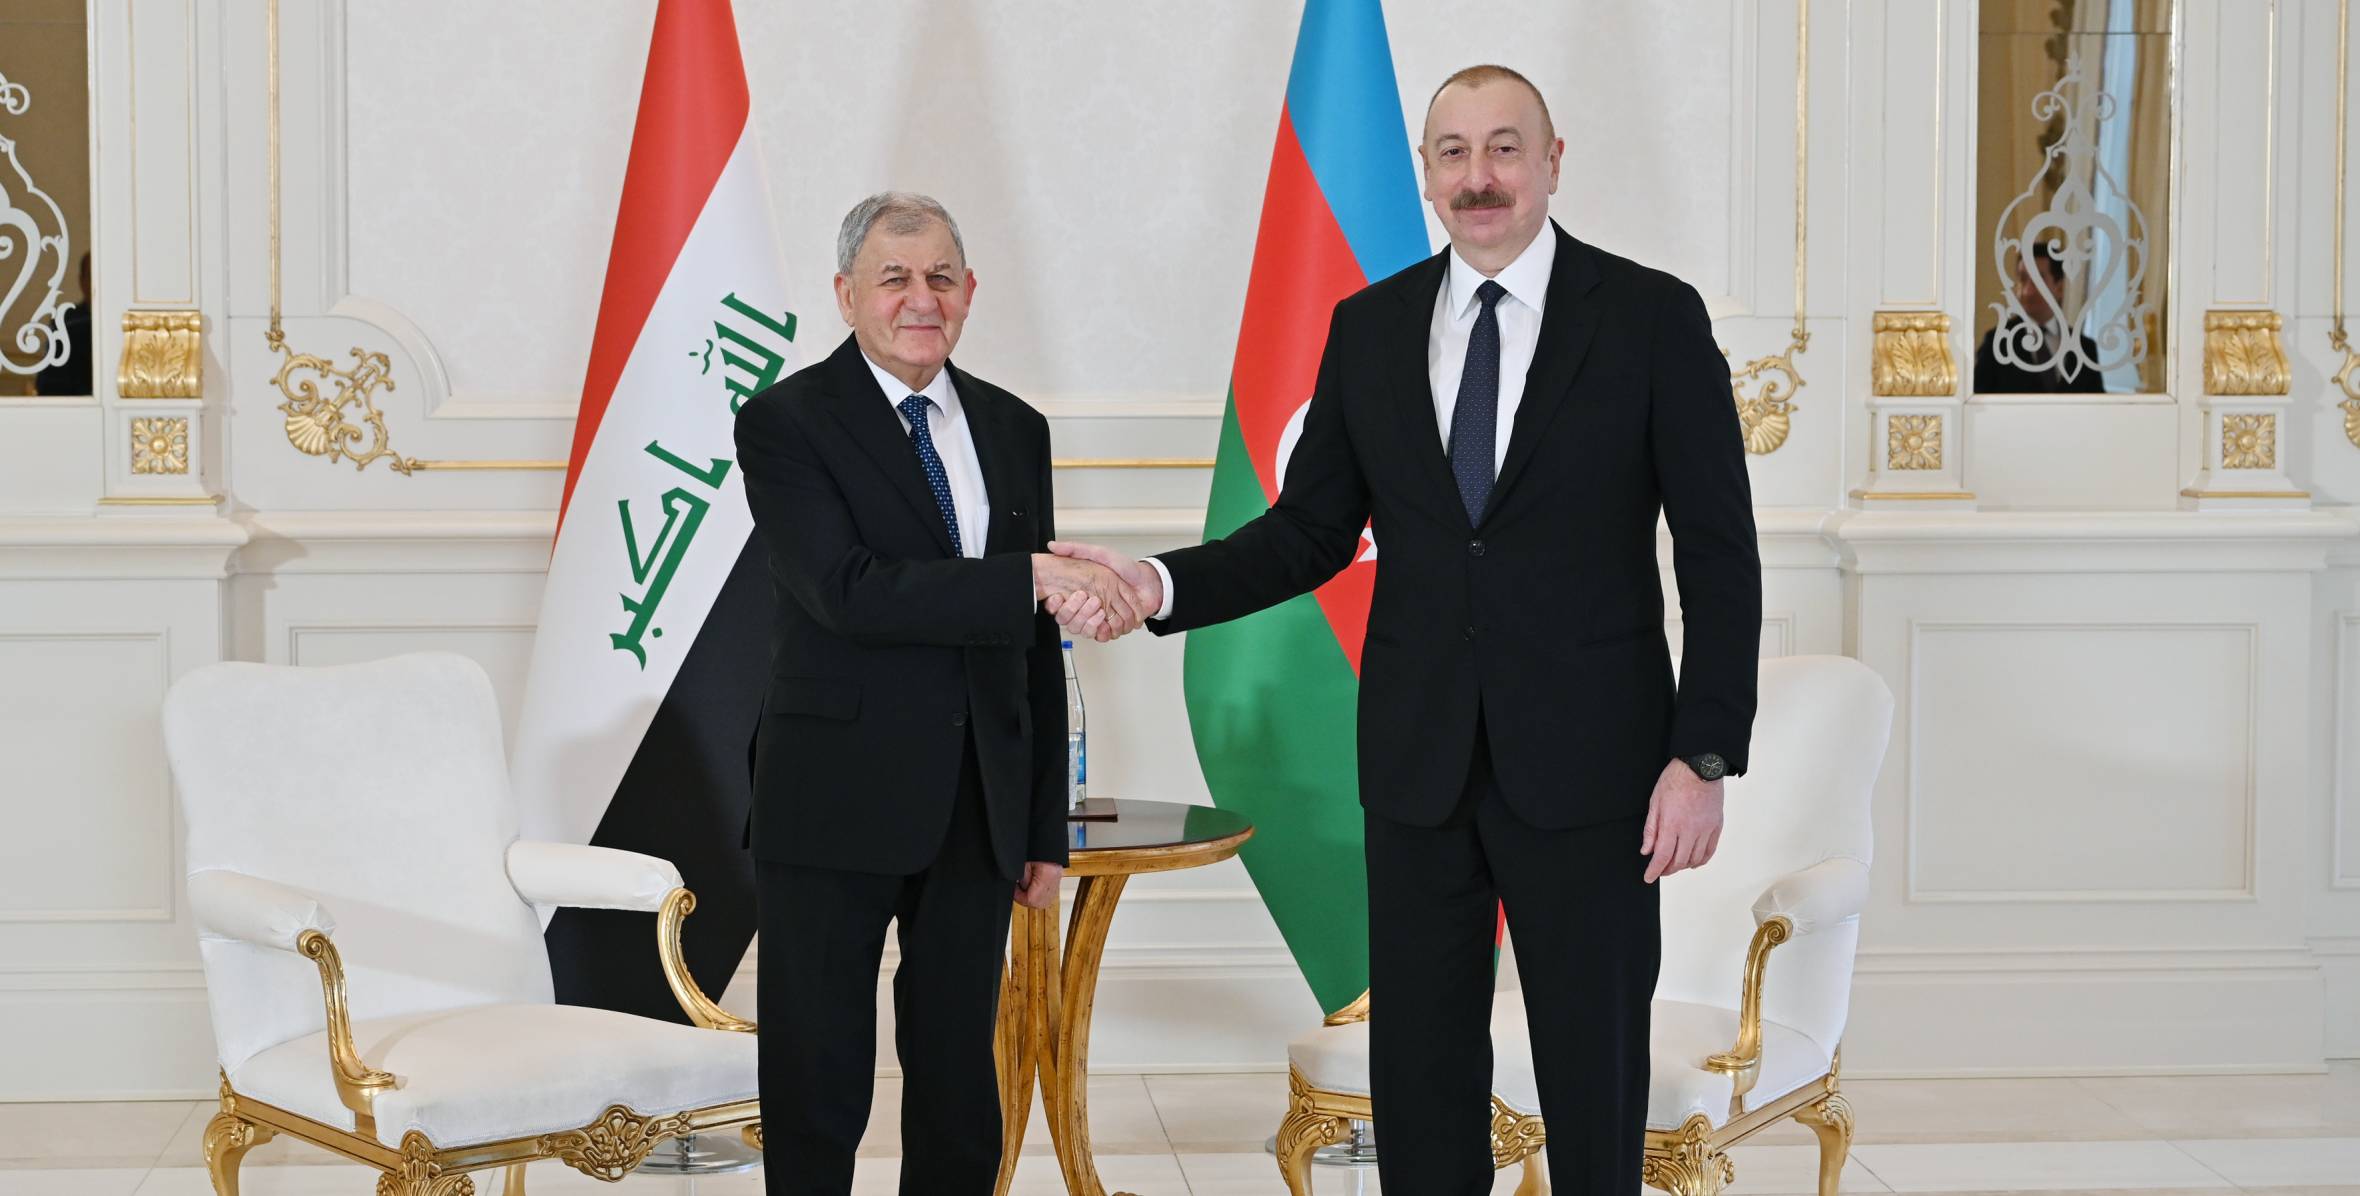 Ilham Aliyev met with President of Iraq Abdullatif Jamal Rashid